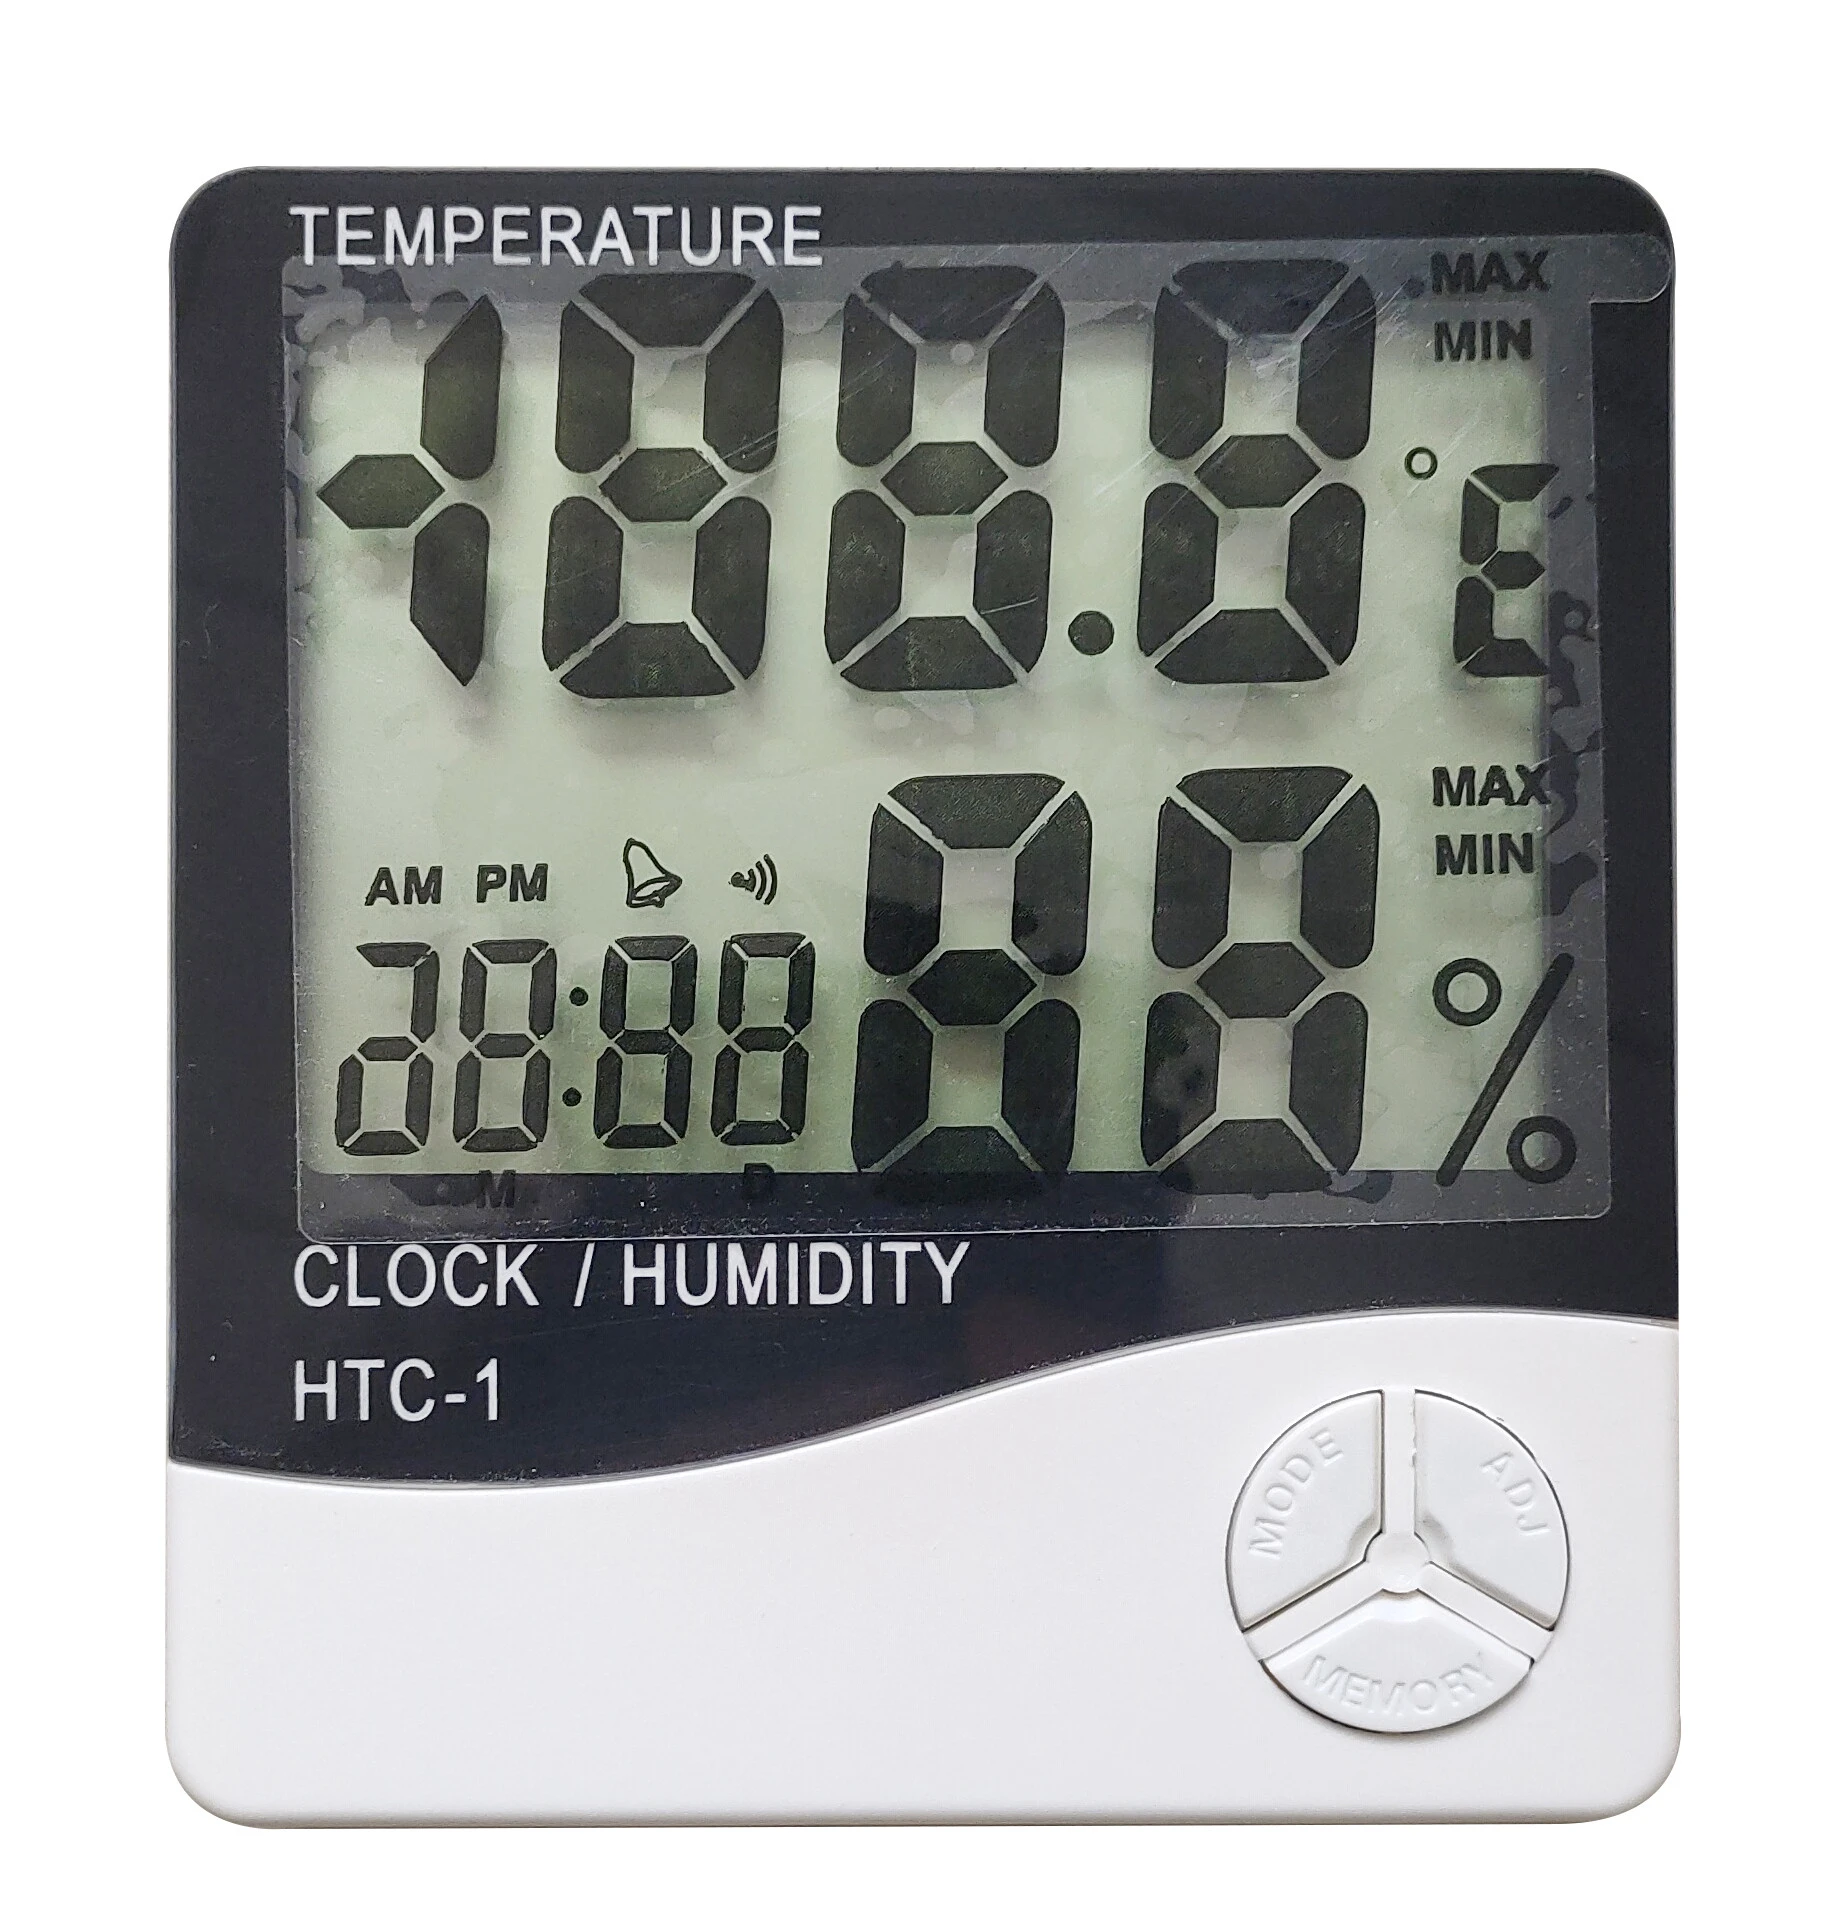 Indoor thermo-hygrometer HTC-1 digital temperature and humidity meter humidity meters gauge